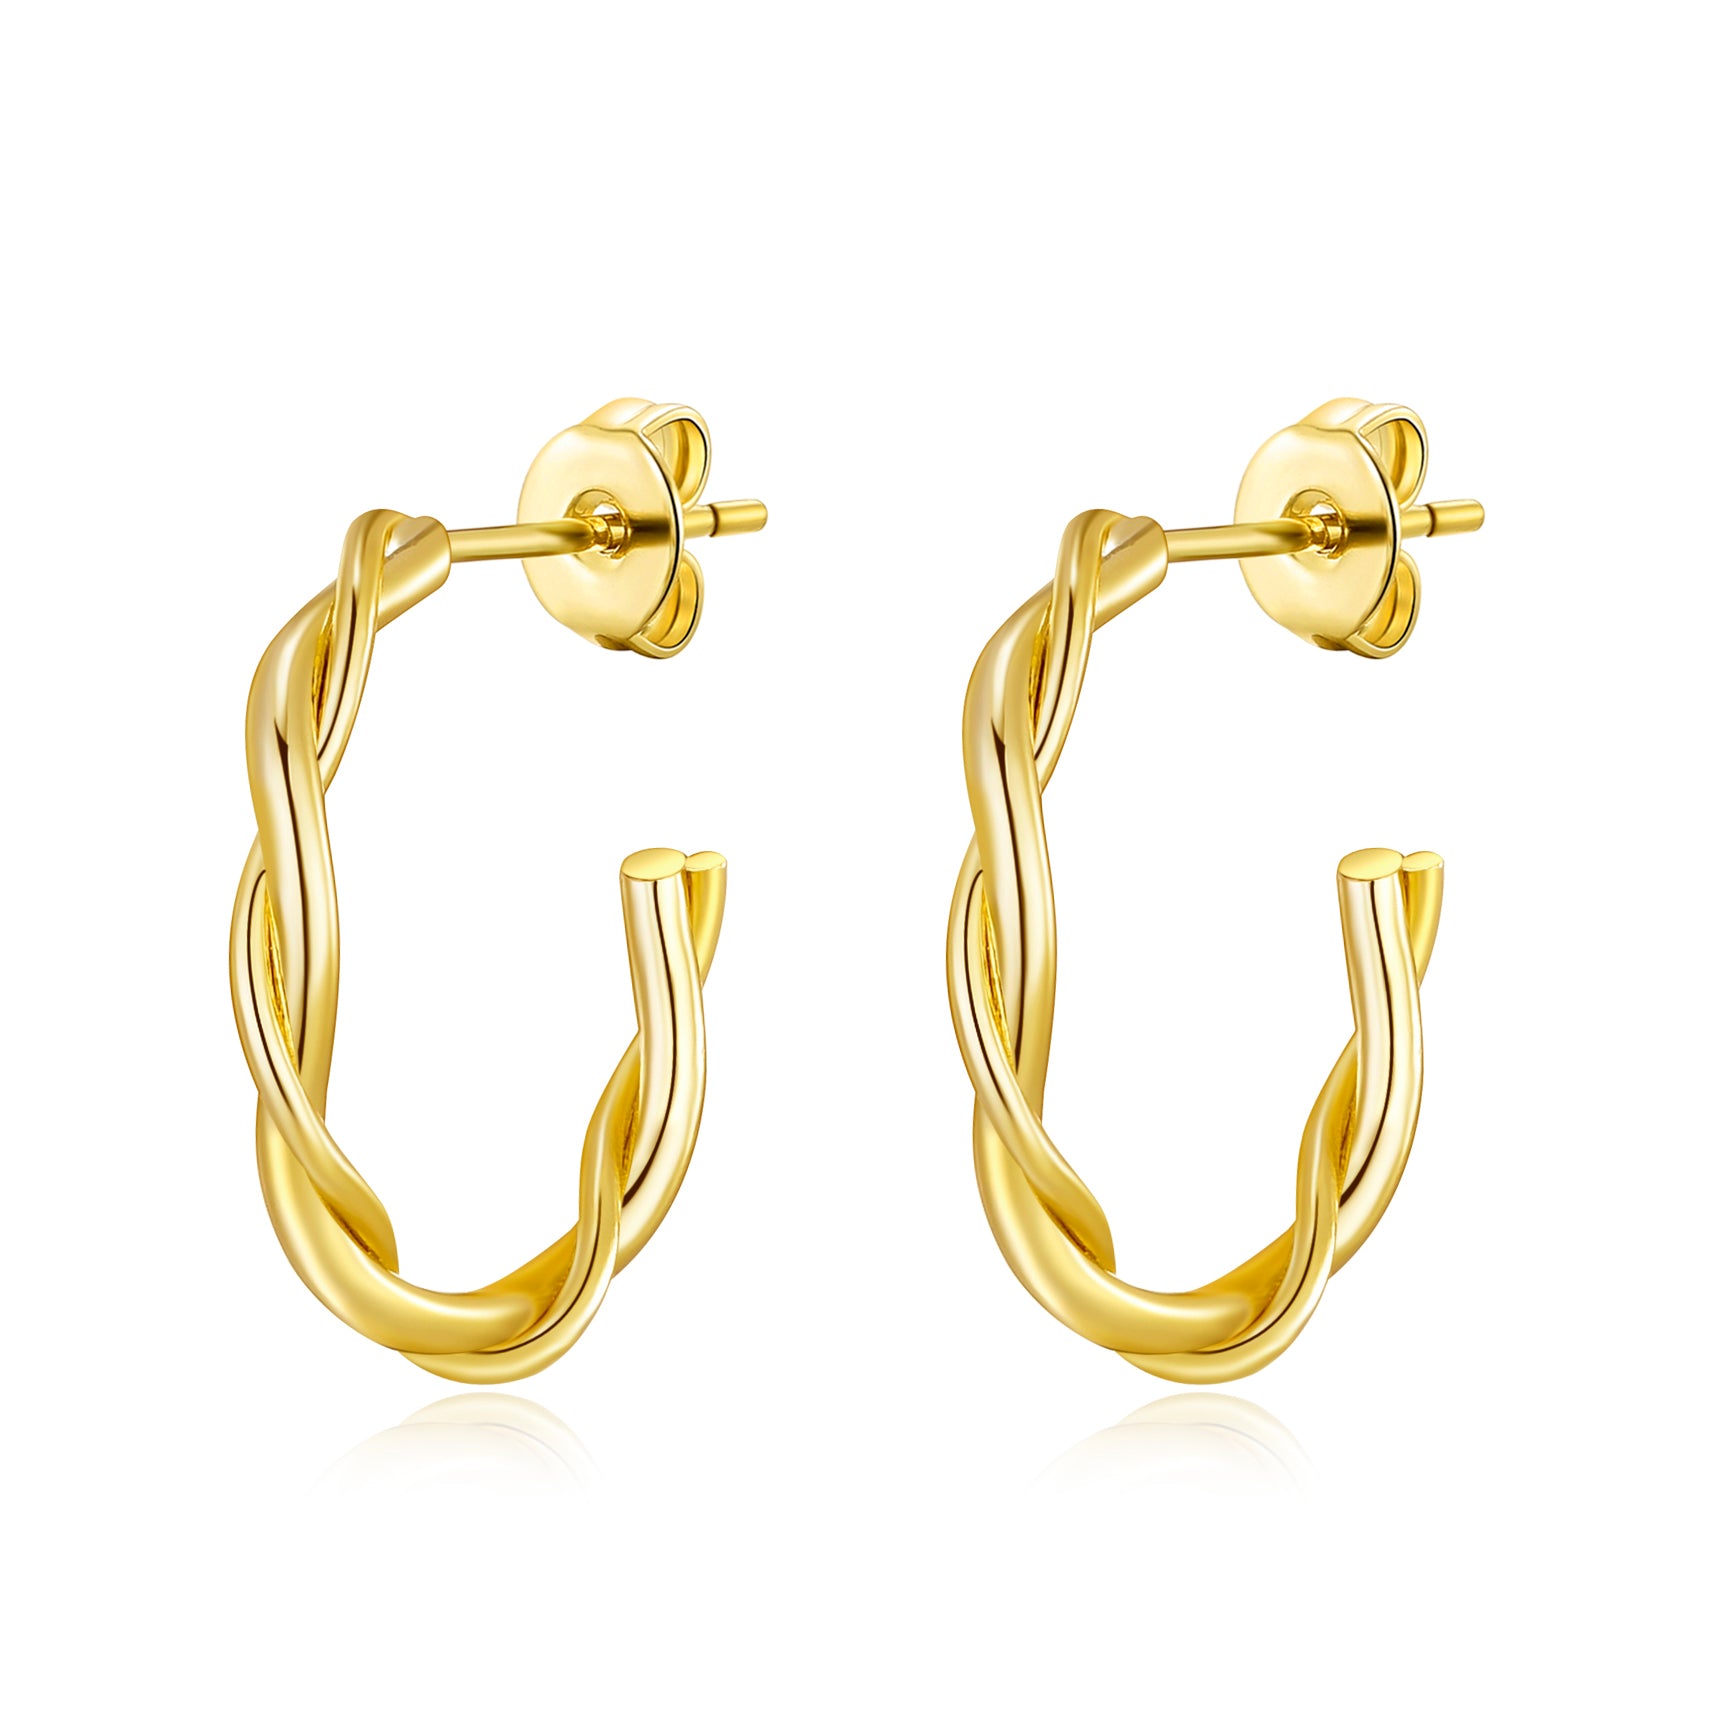 Gold Plated 20mm Twisted Hoop Earrings by Philip Jones Jewellery